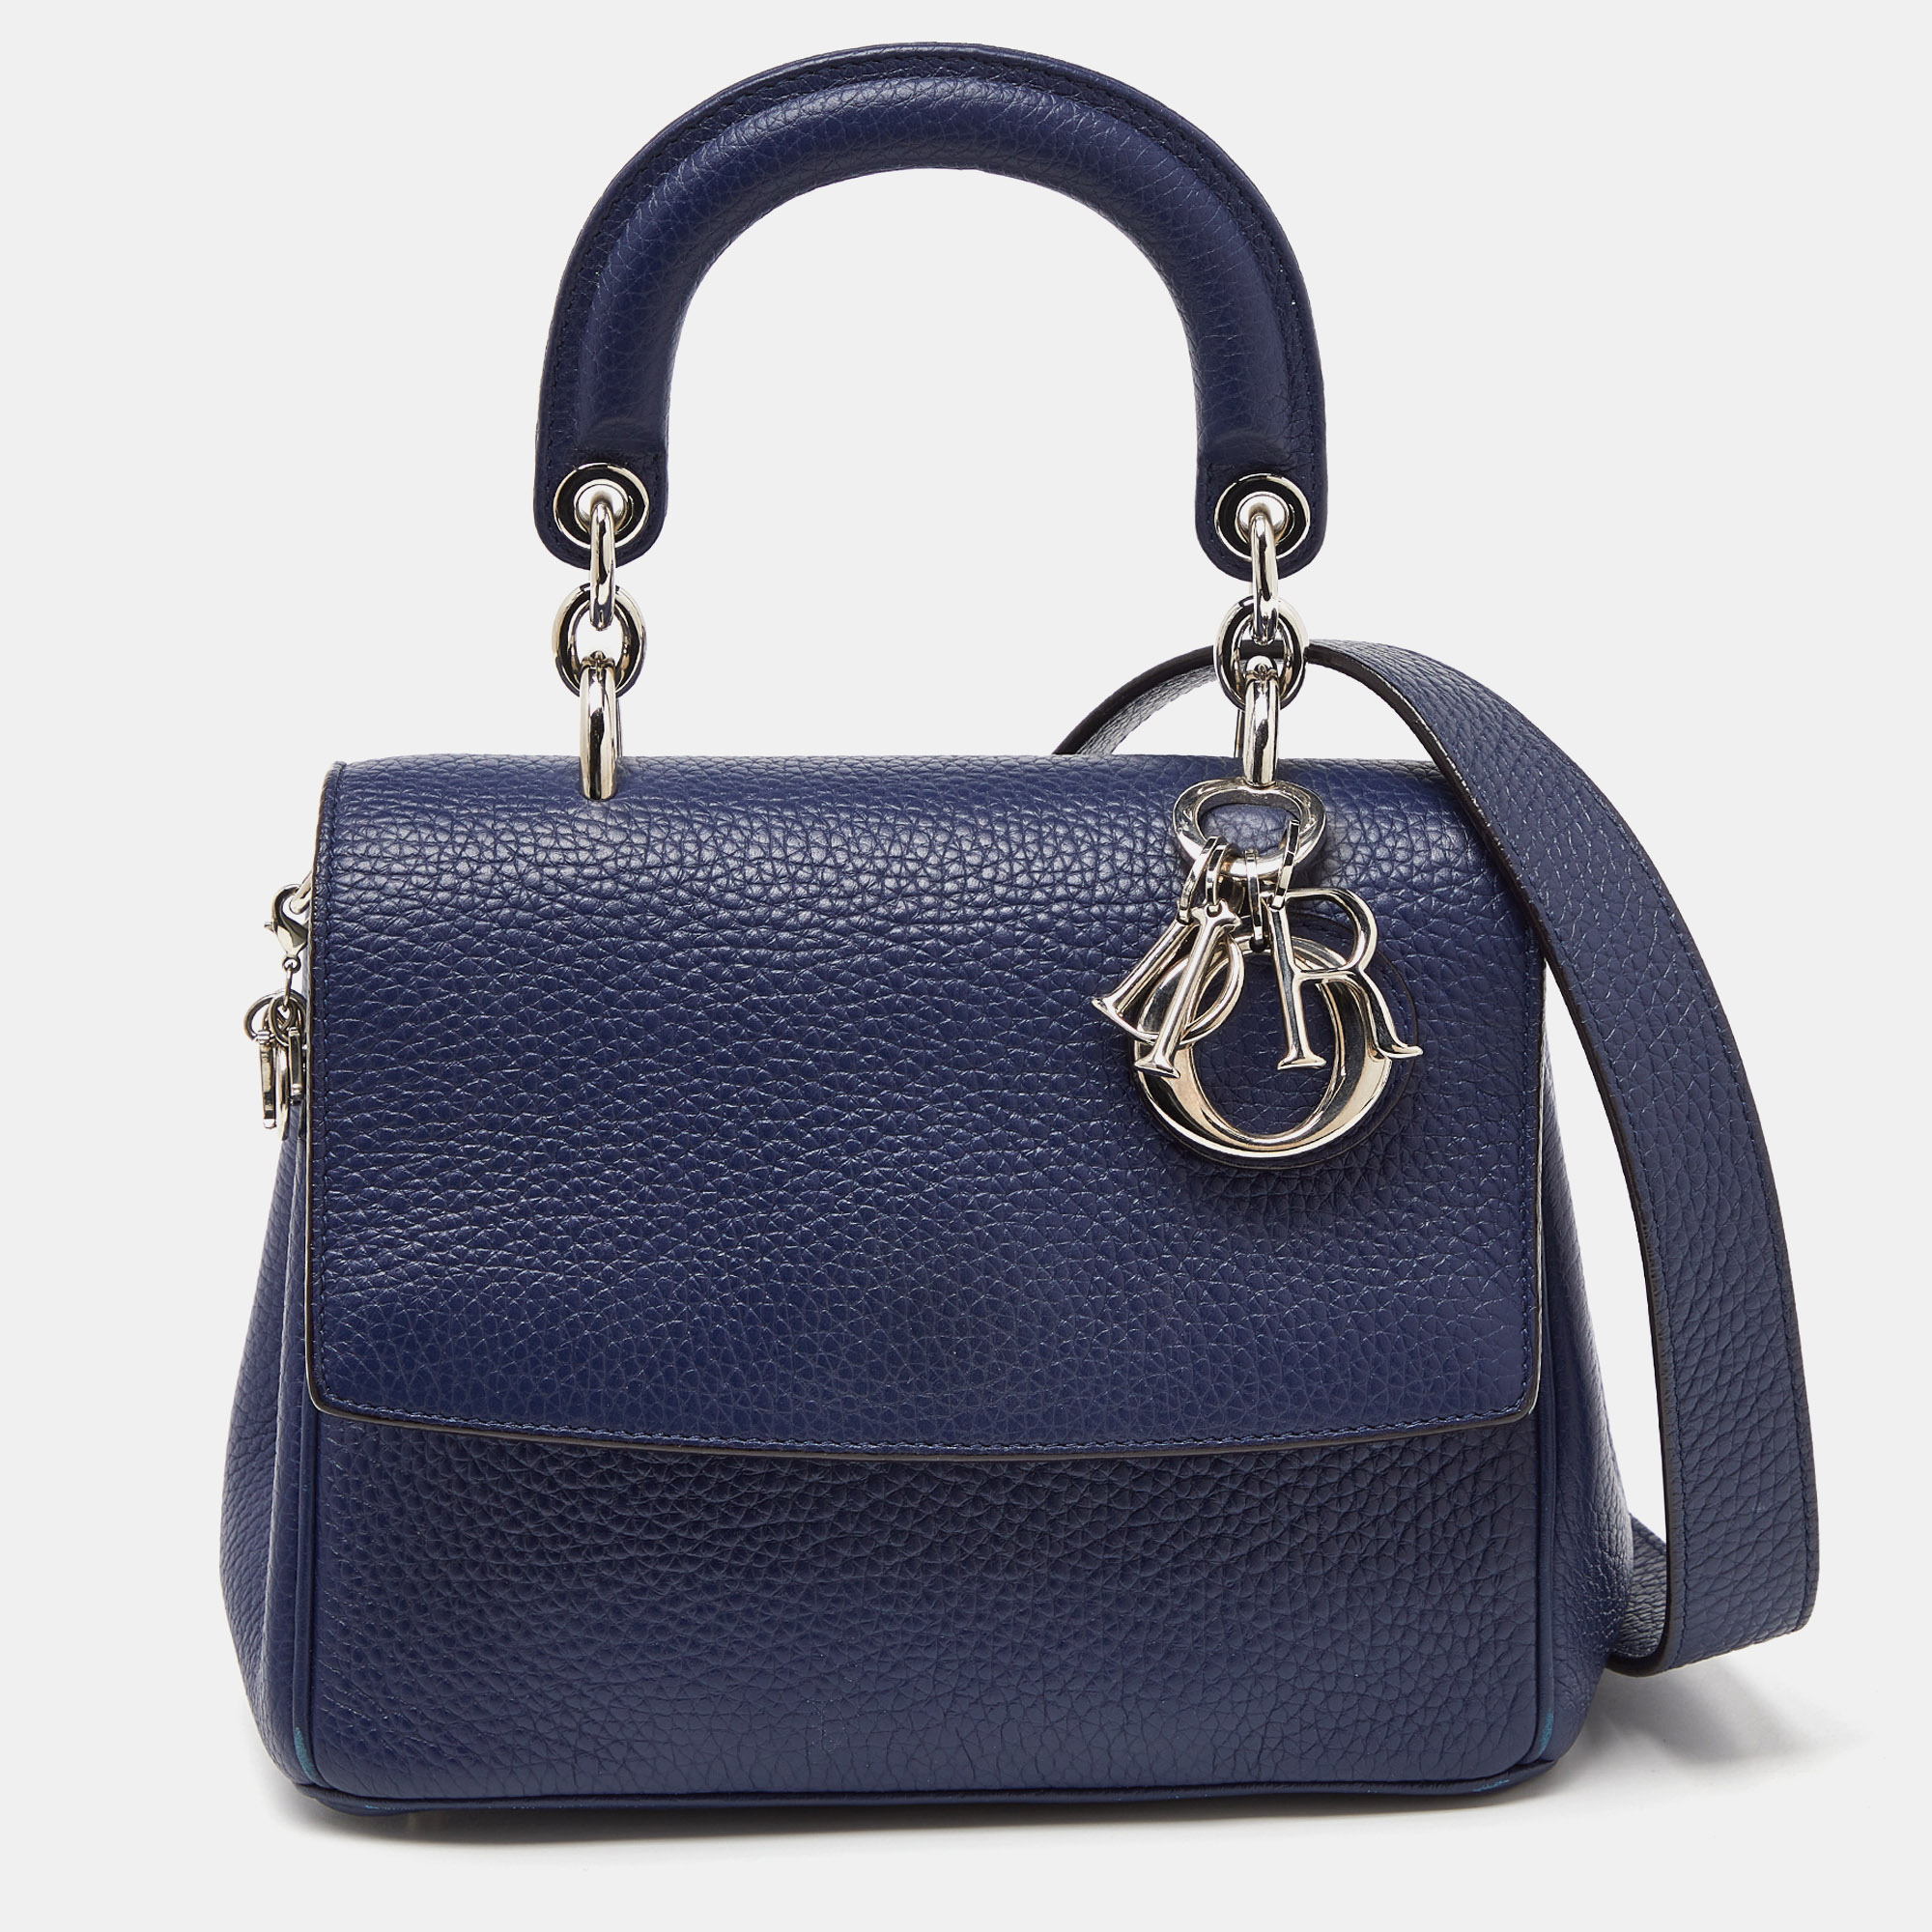 Dior blue leather mini be dior top handle bag